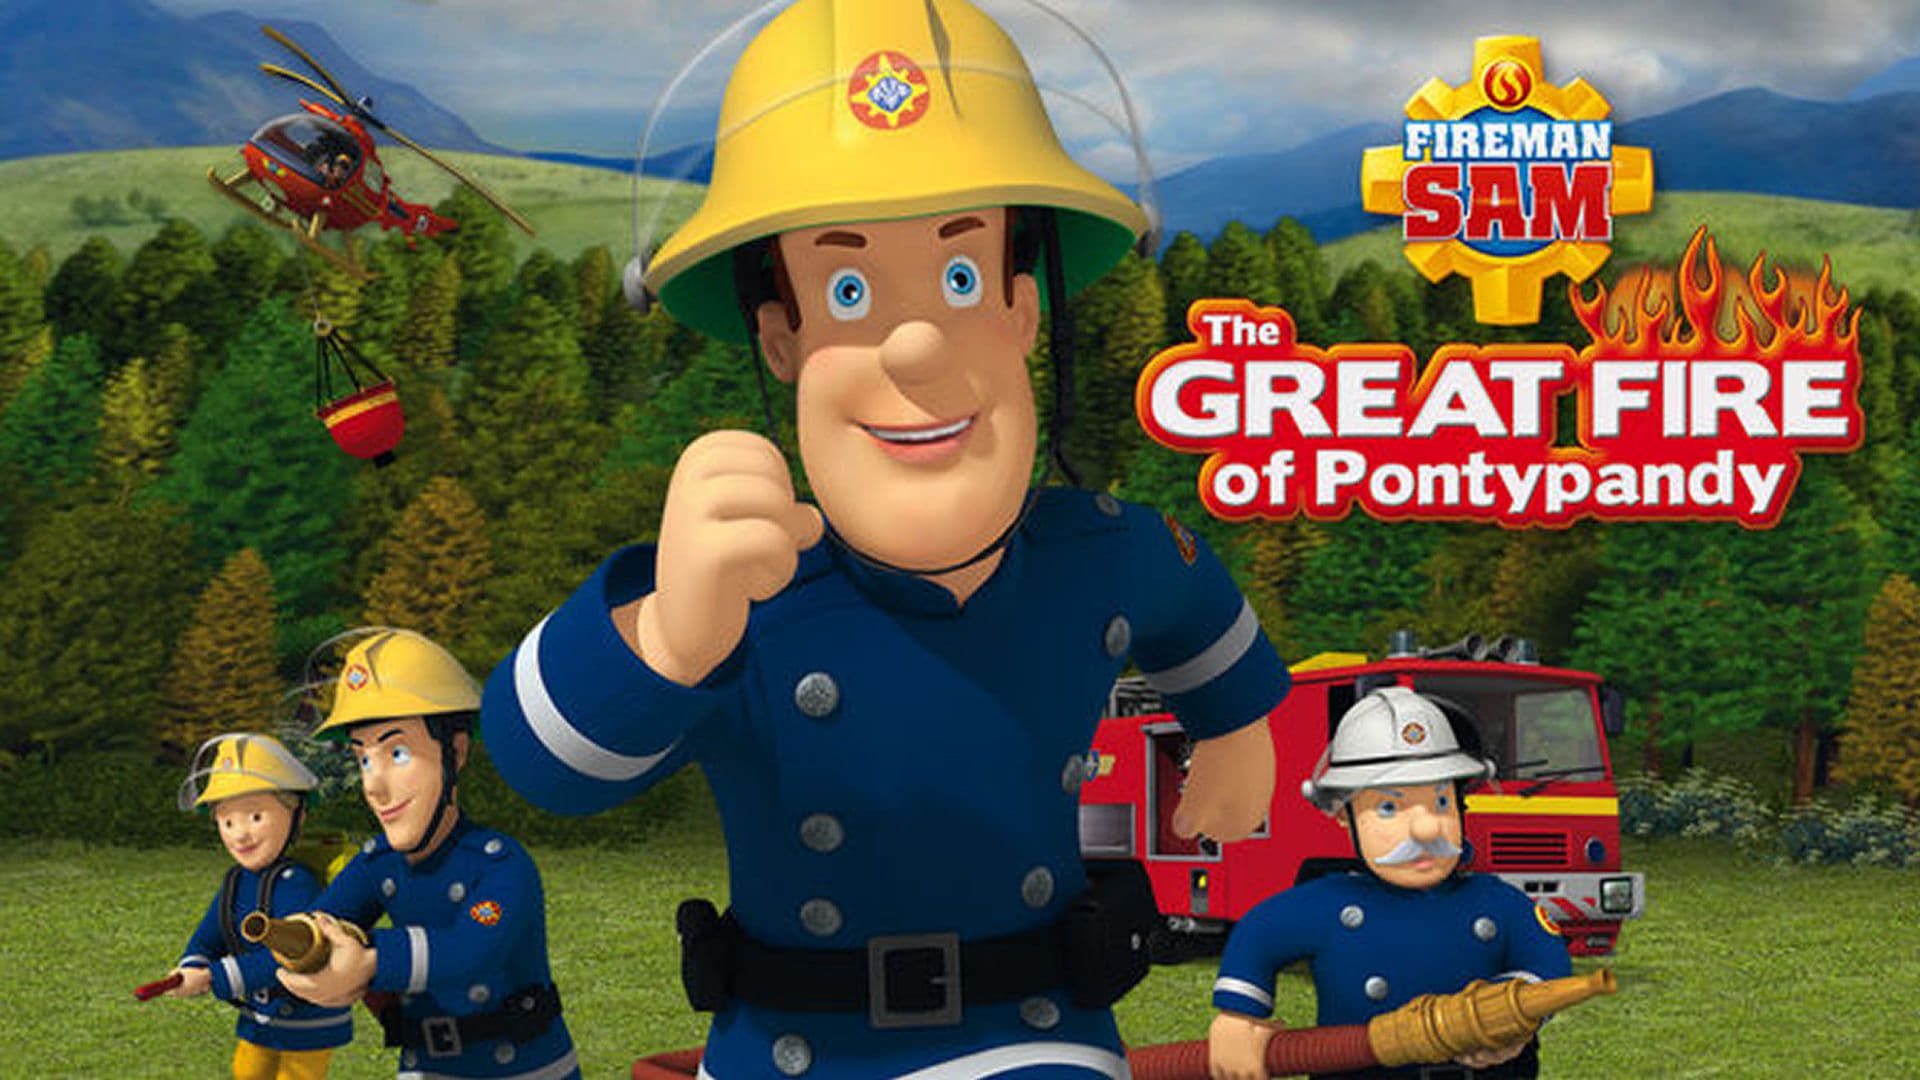 Fireman Sam: The Great Fire of Pontypandy background